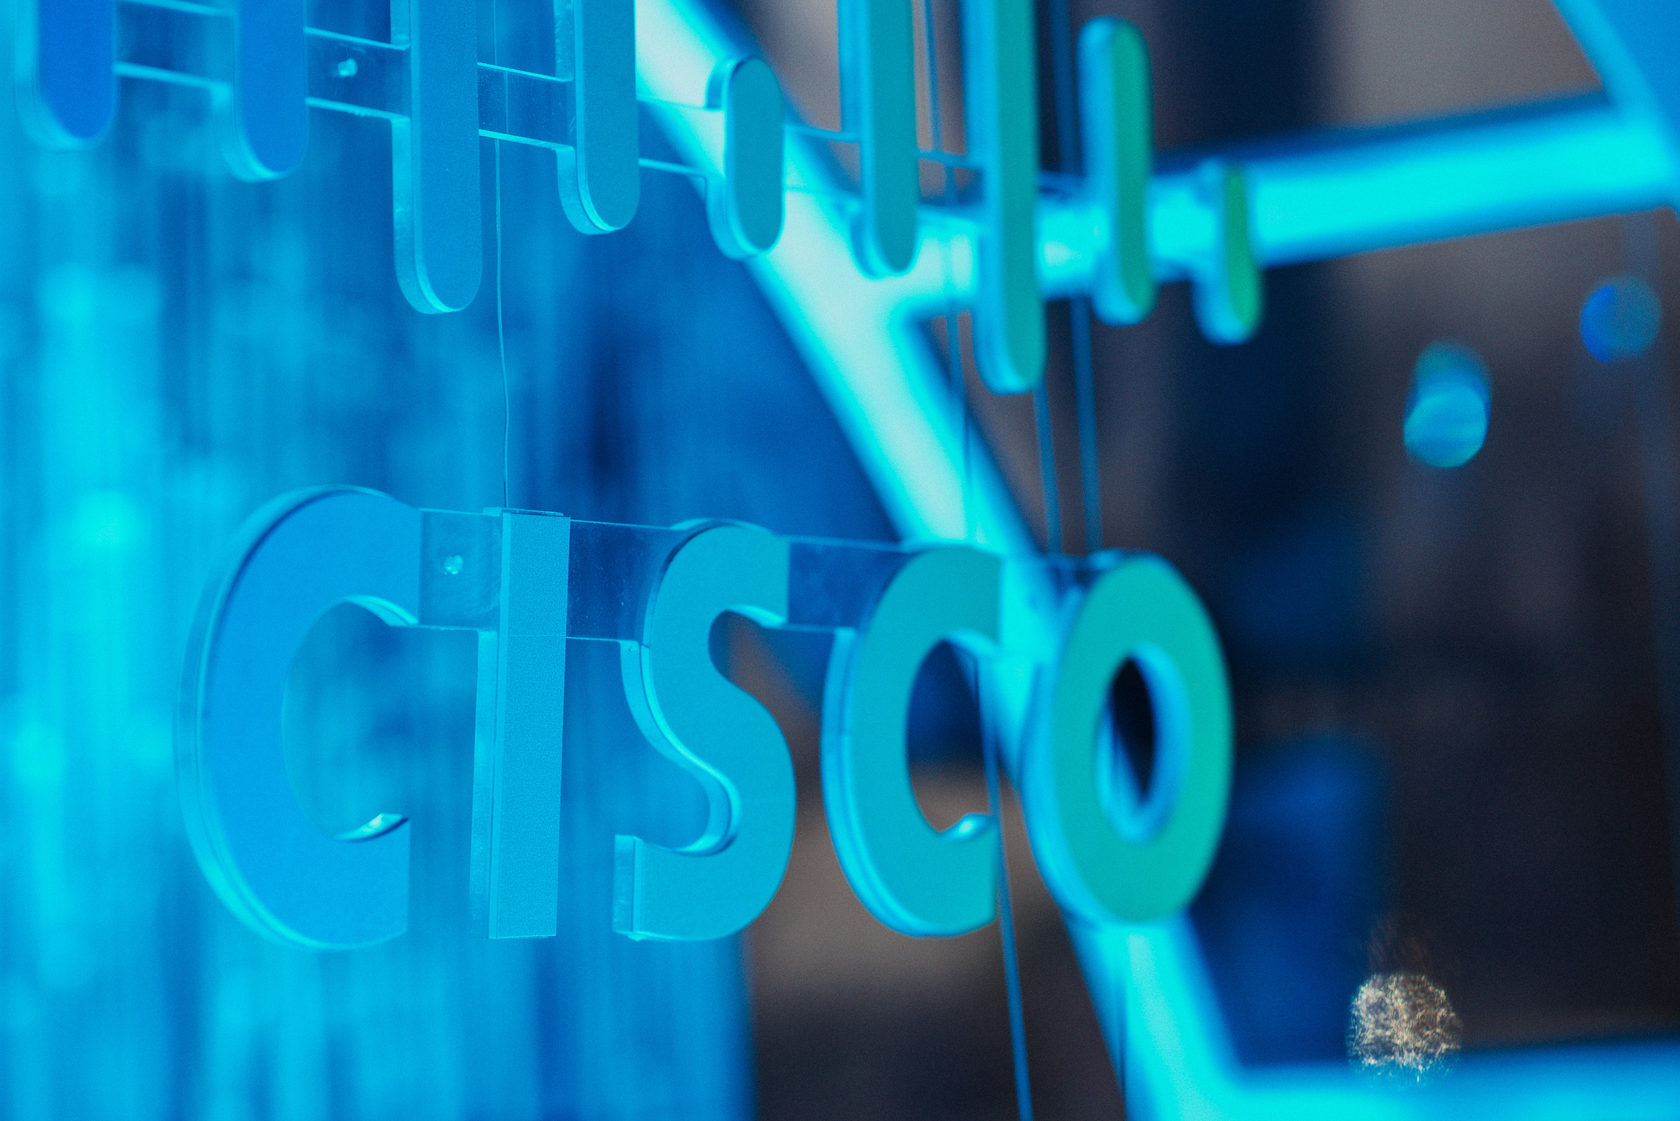 Акции Cisco - прогноз и цена в 2021 году